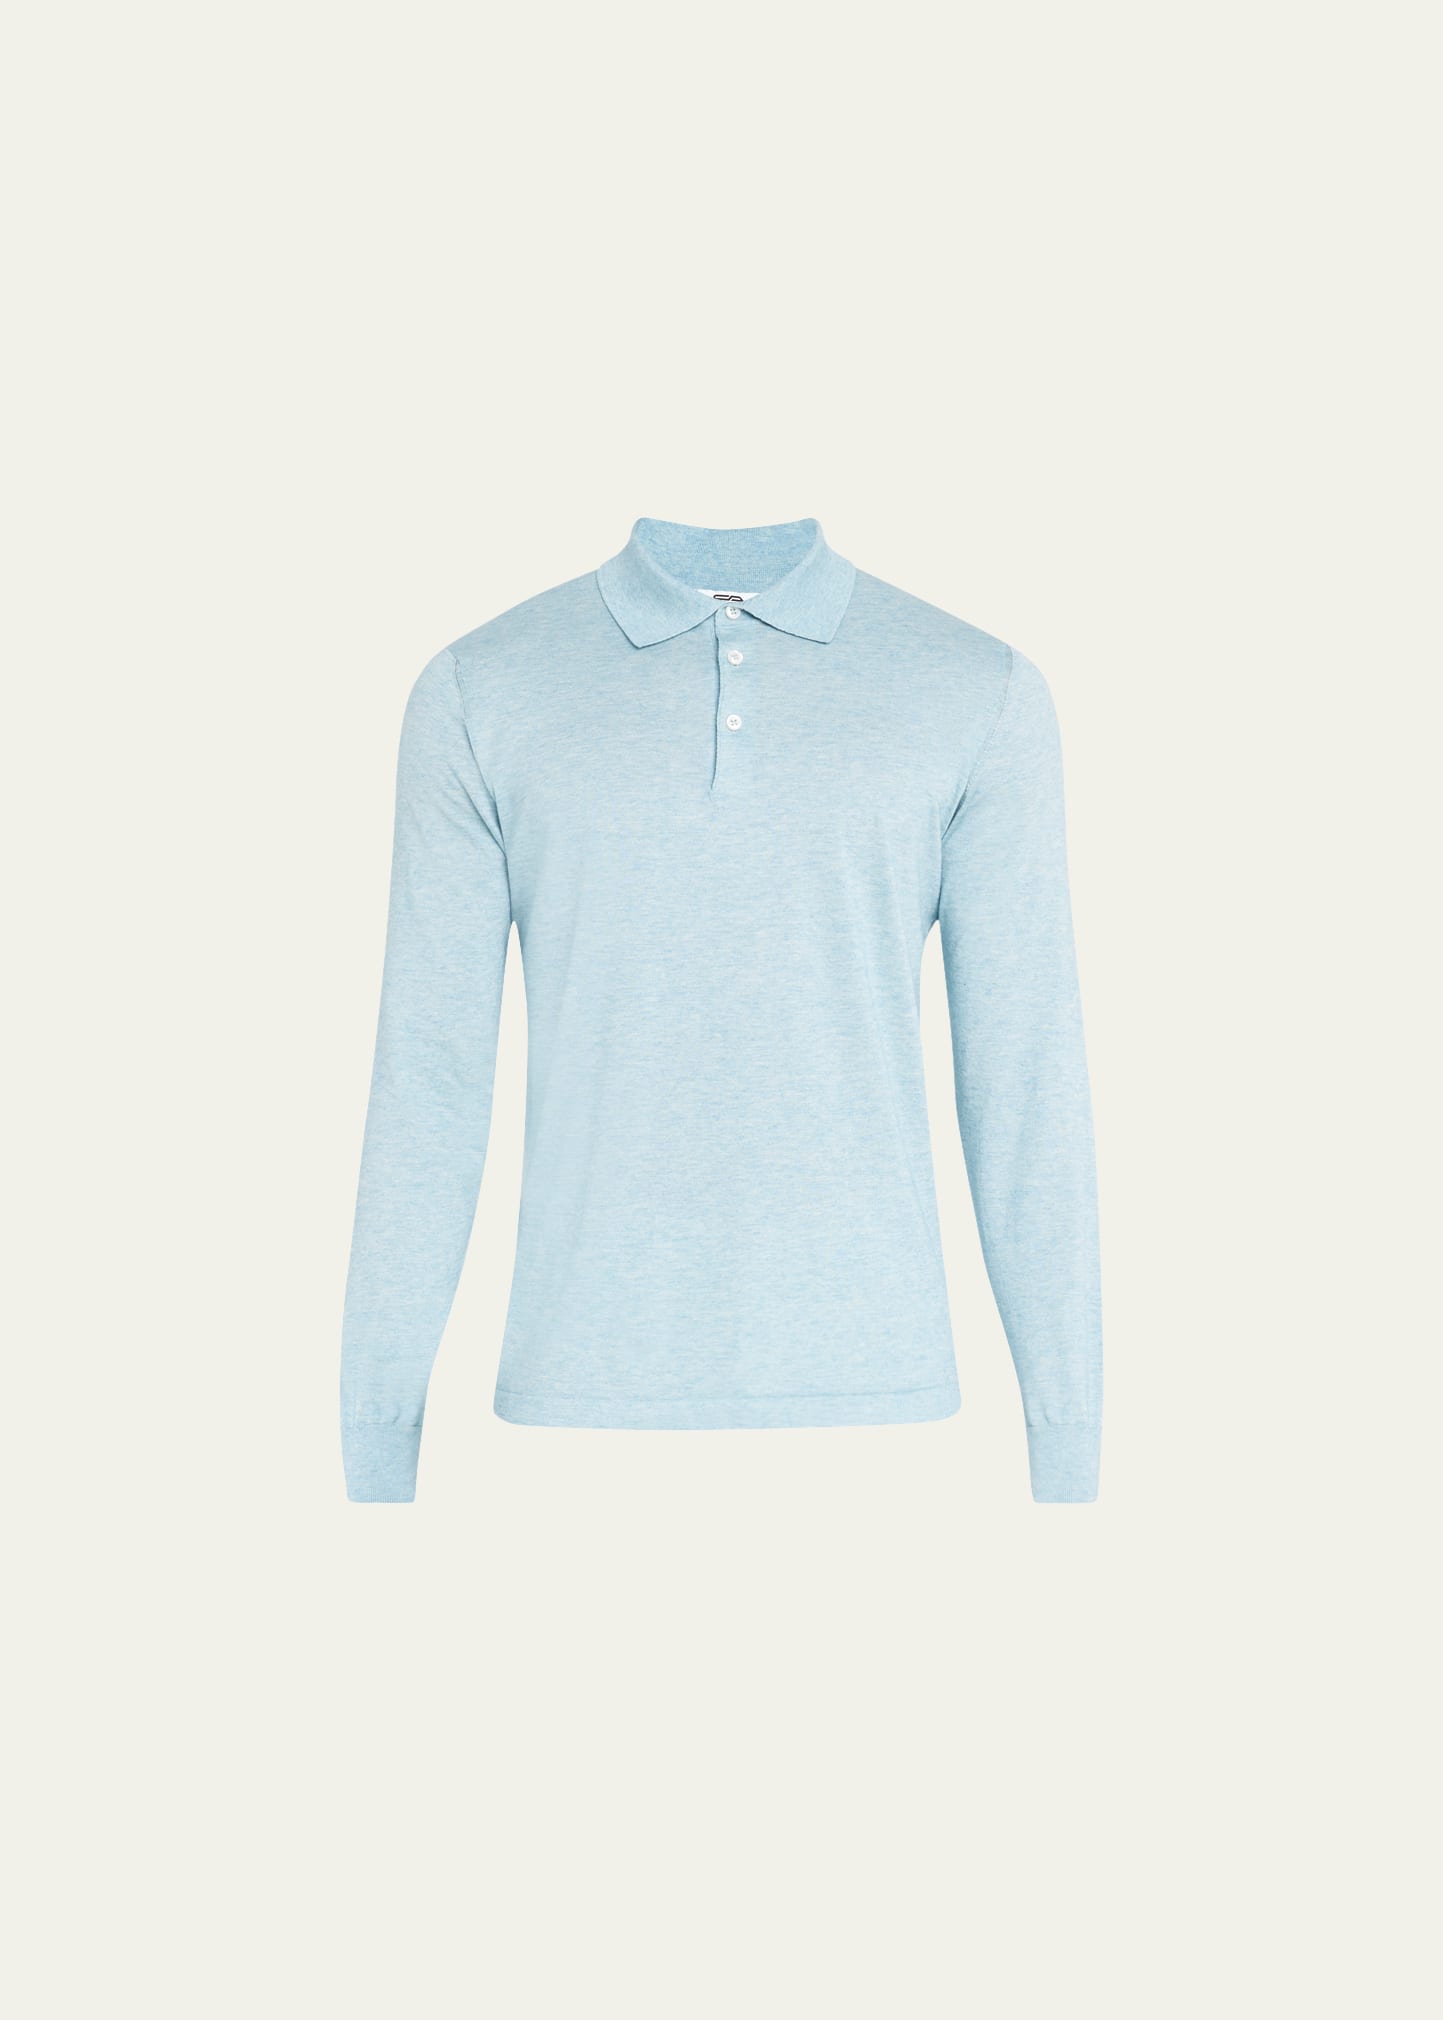 Cesare Attolini Men's Blue Sea Cashmere Blend Polo Shirt